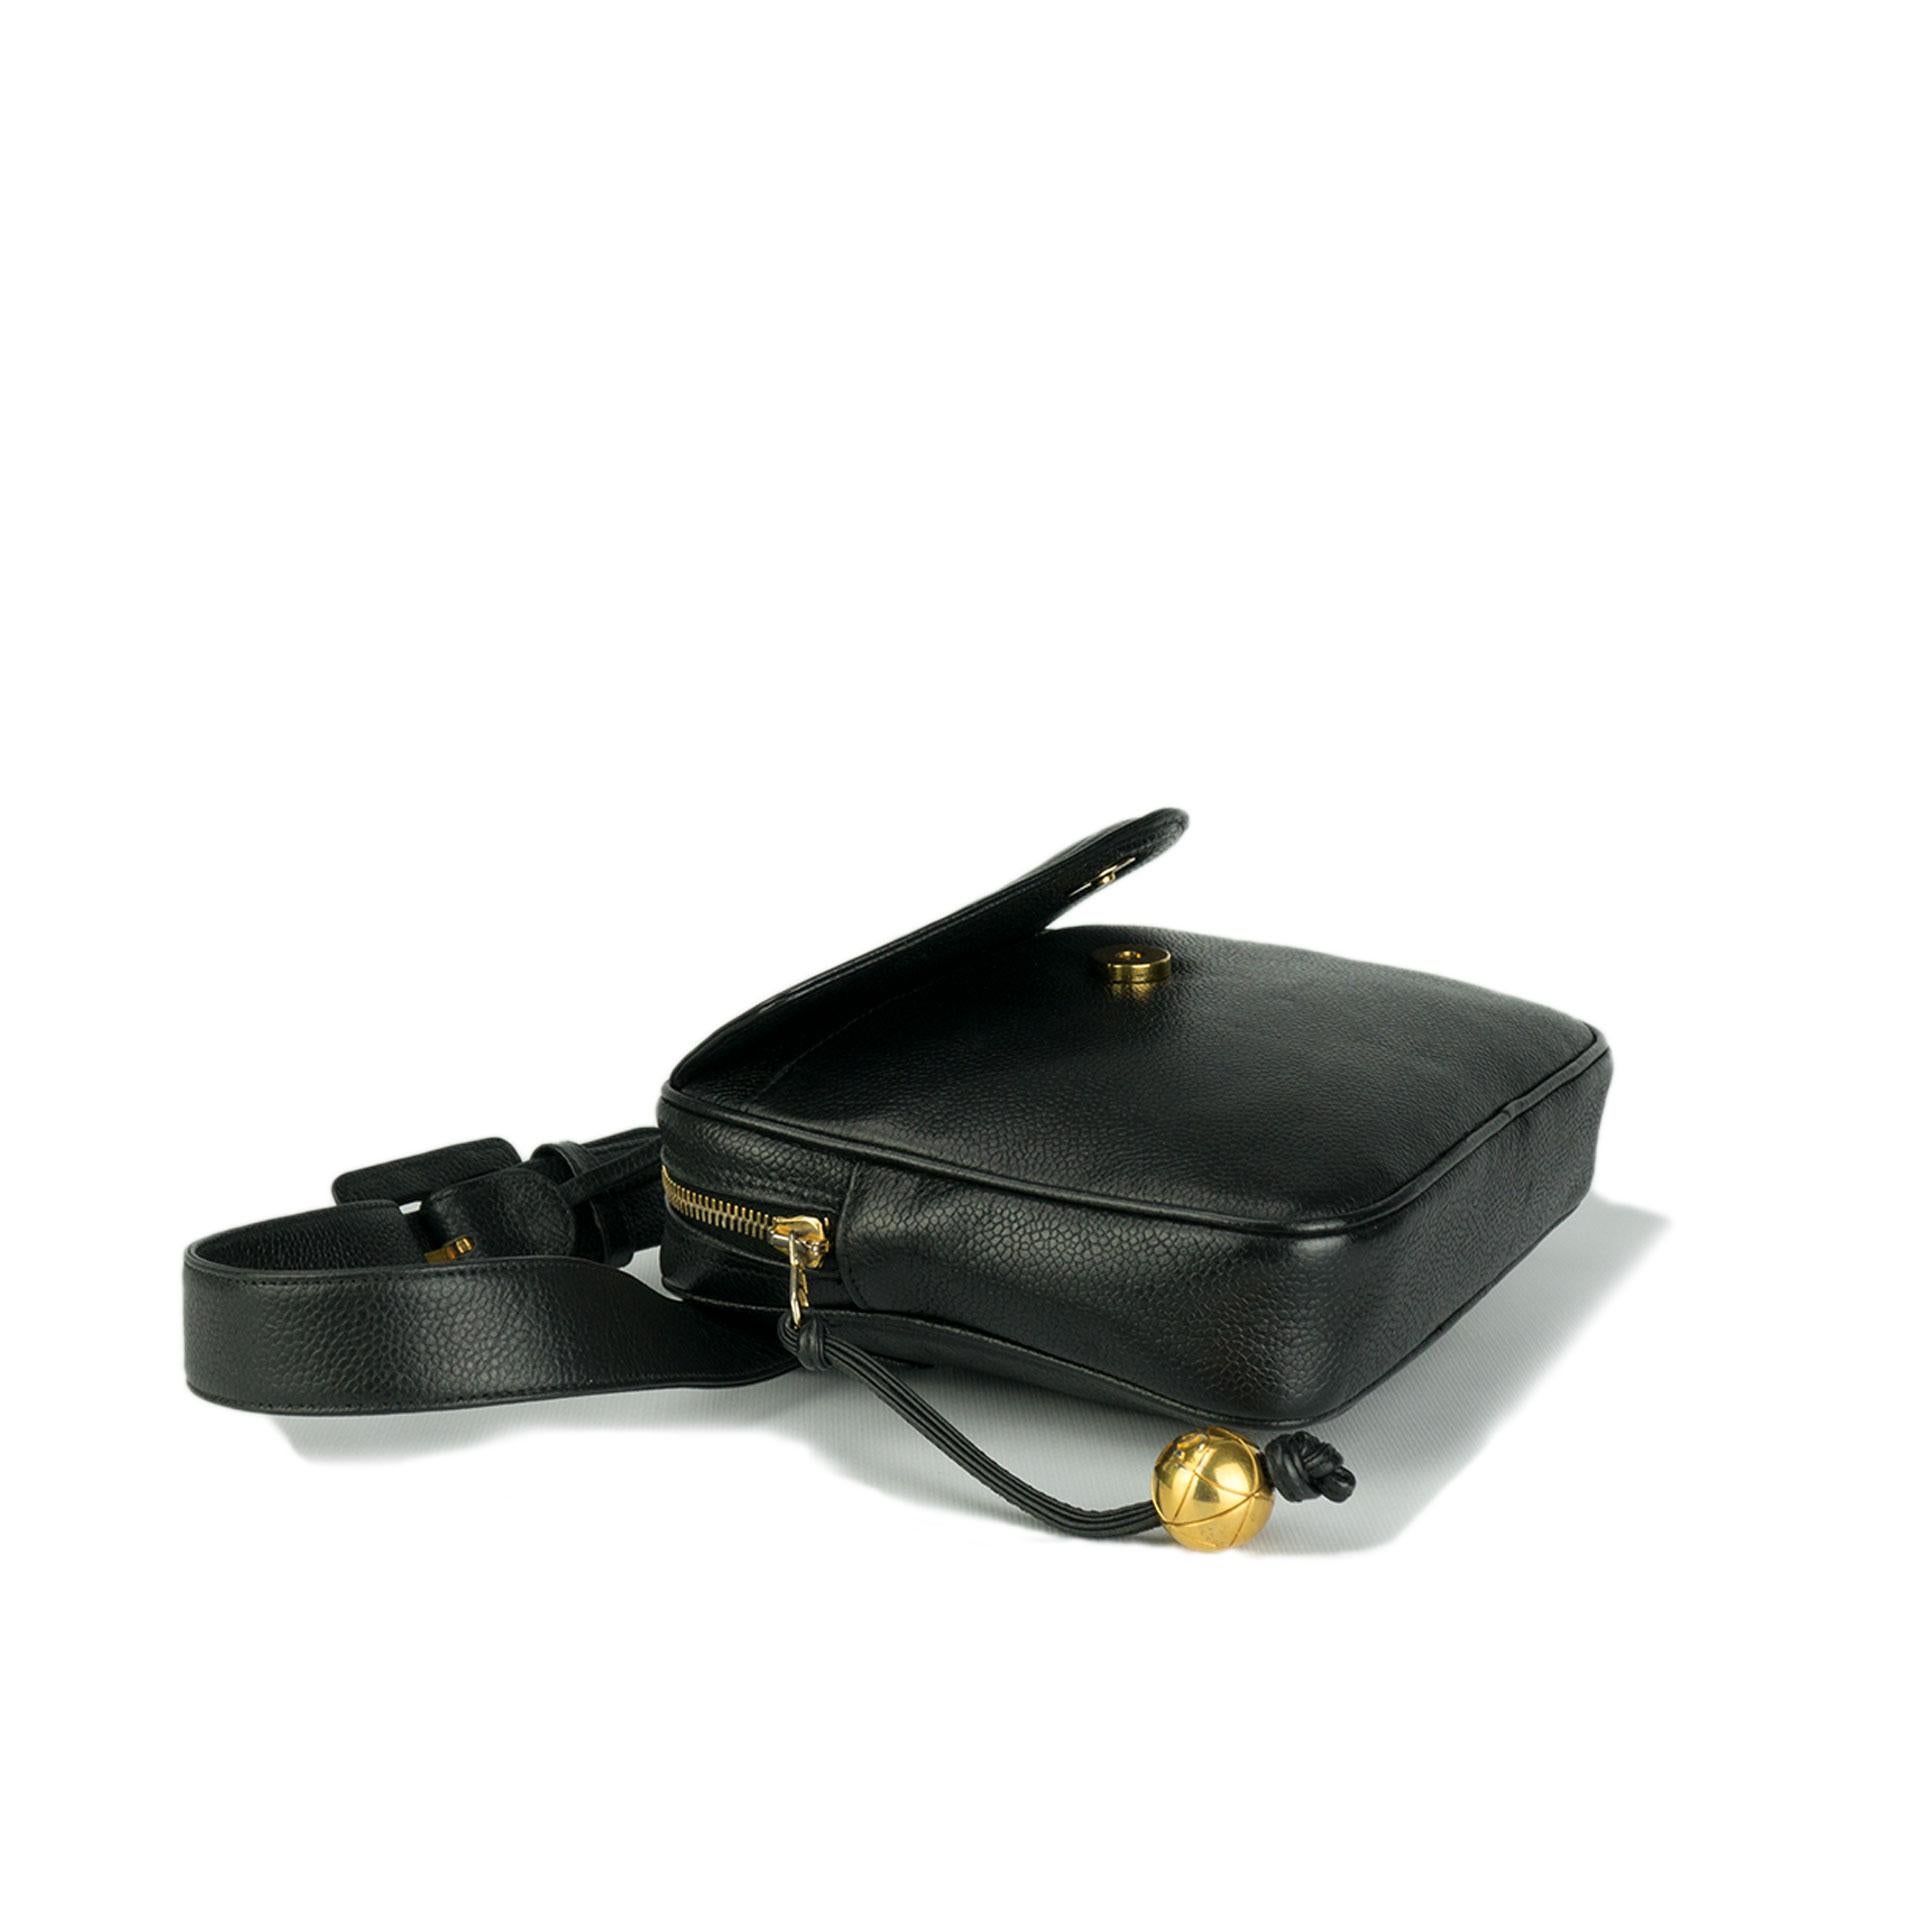 1994 {VINTAGE 24 Years}
Gold CC Ball Logo Charm
Black Vinyl leather like interior 
Adjustable 'Chanel' waist strap
Zippered interior long pocket
7